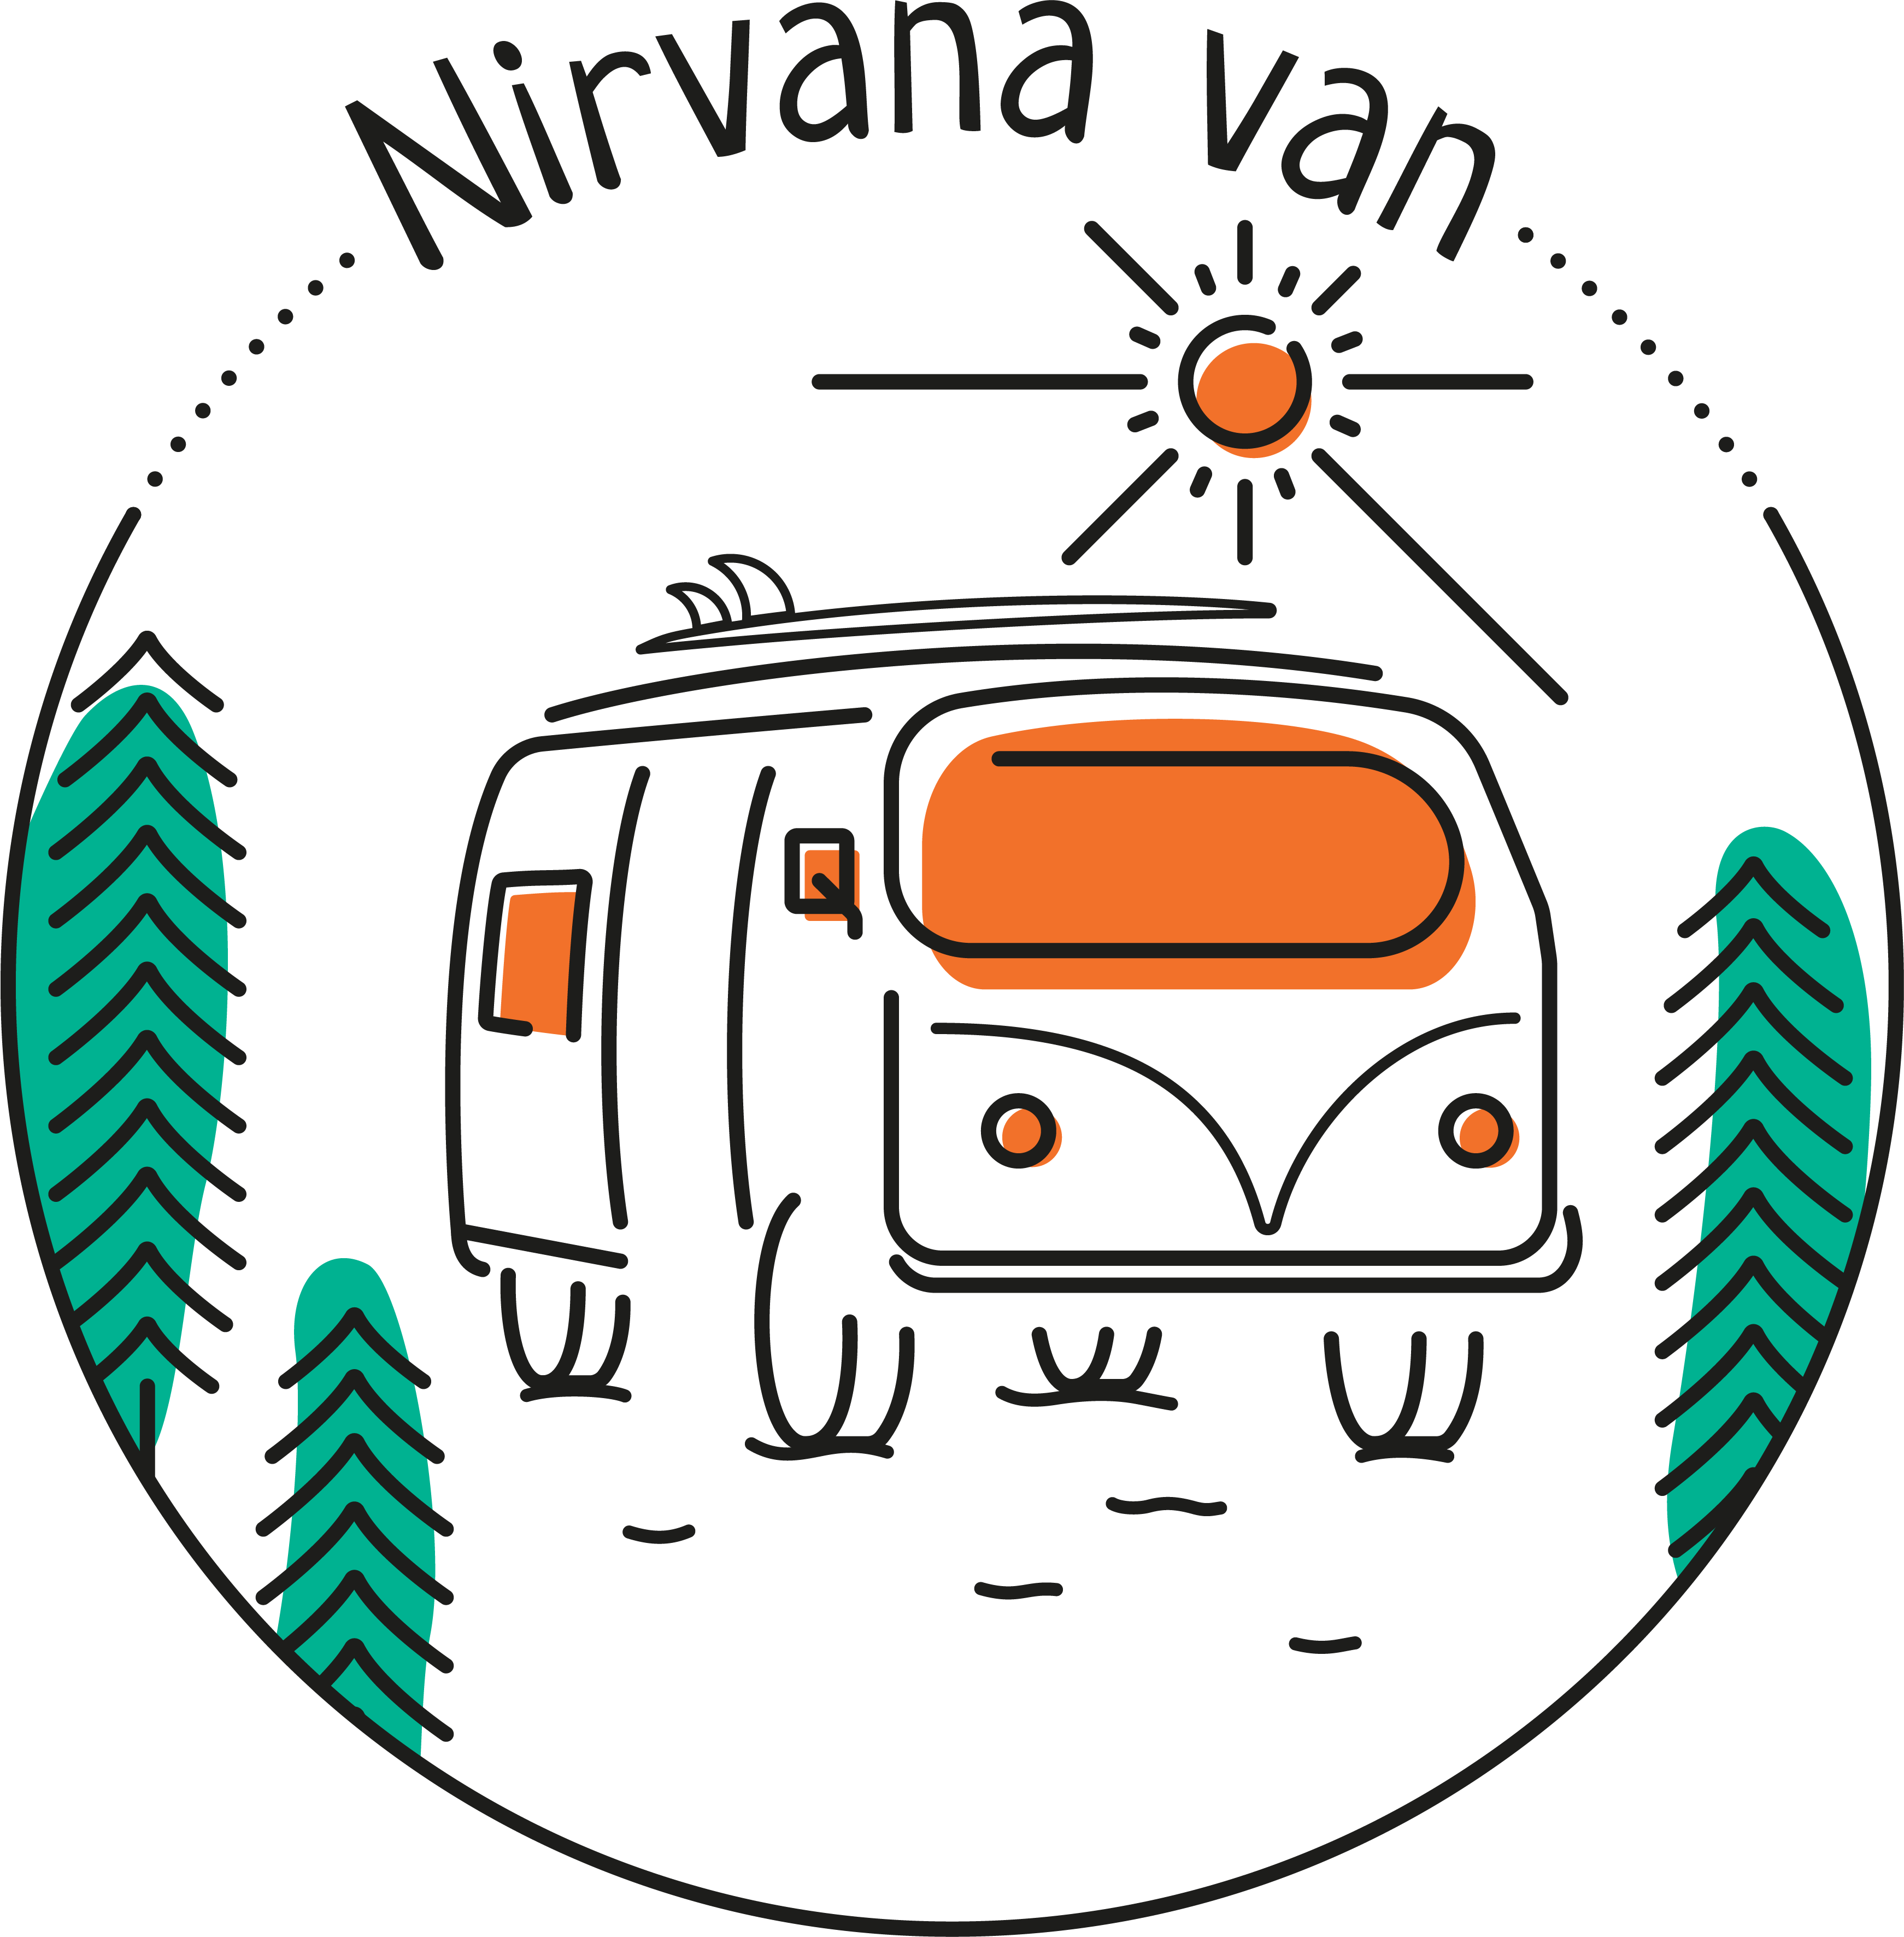 Nirvana van